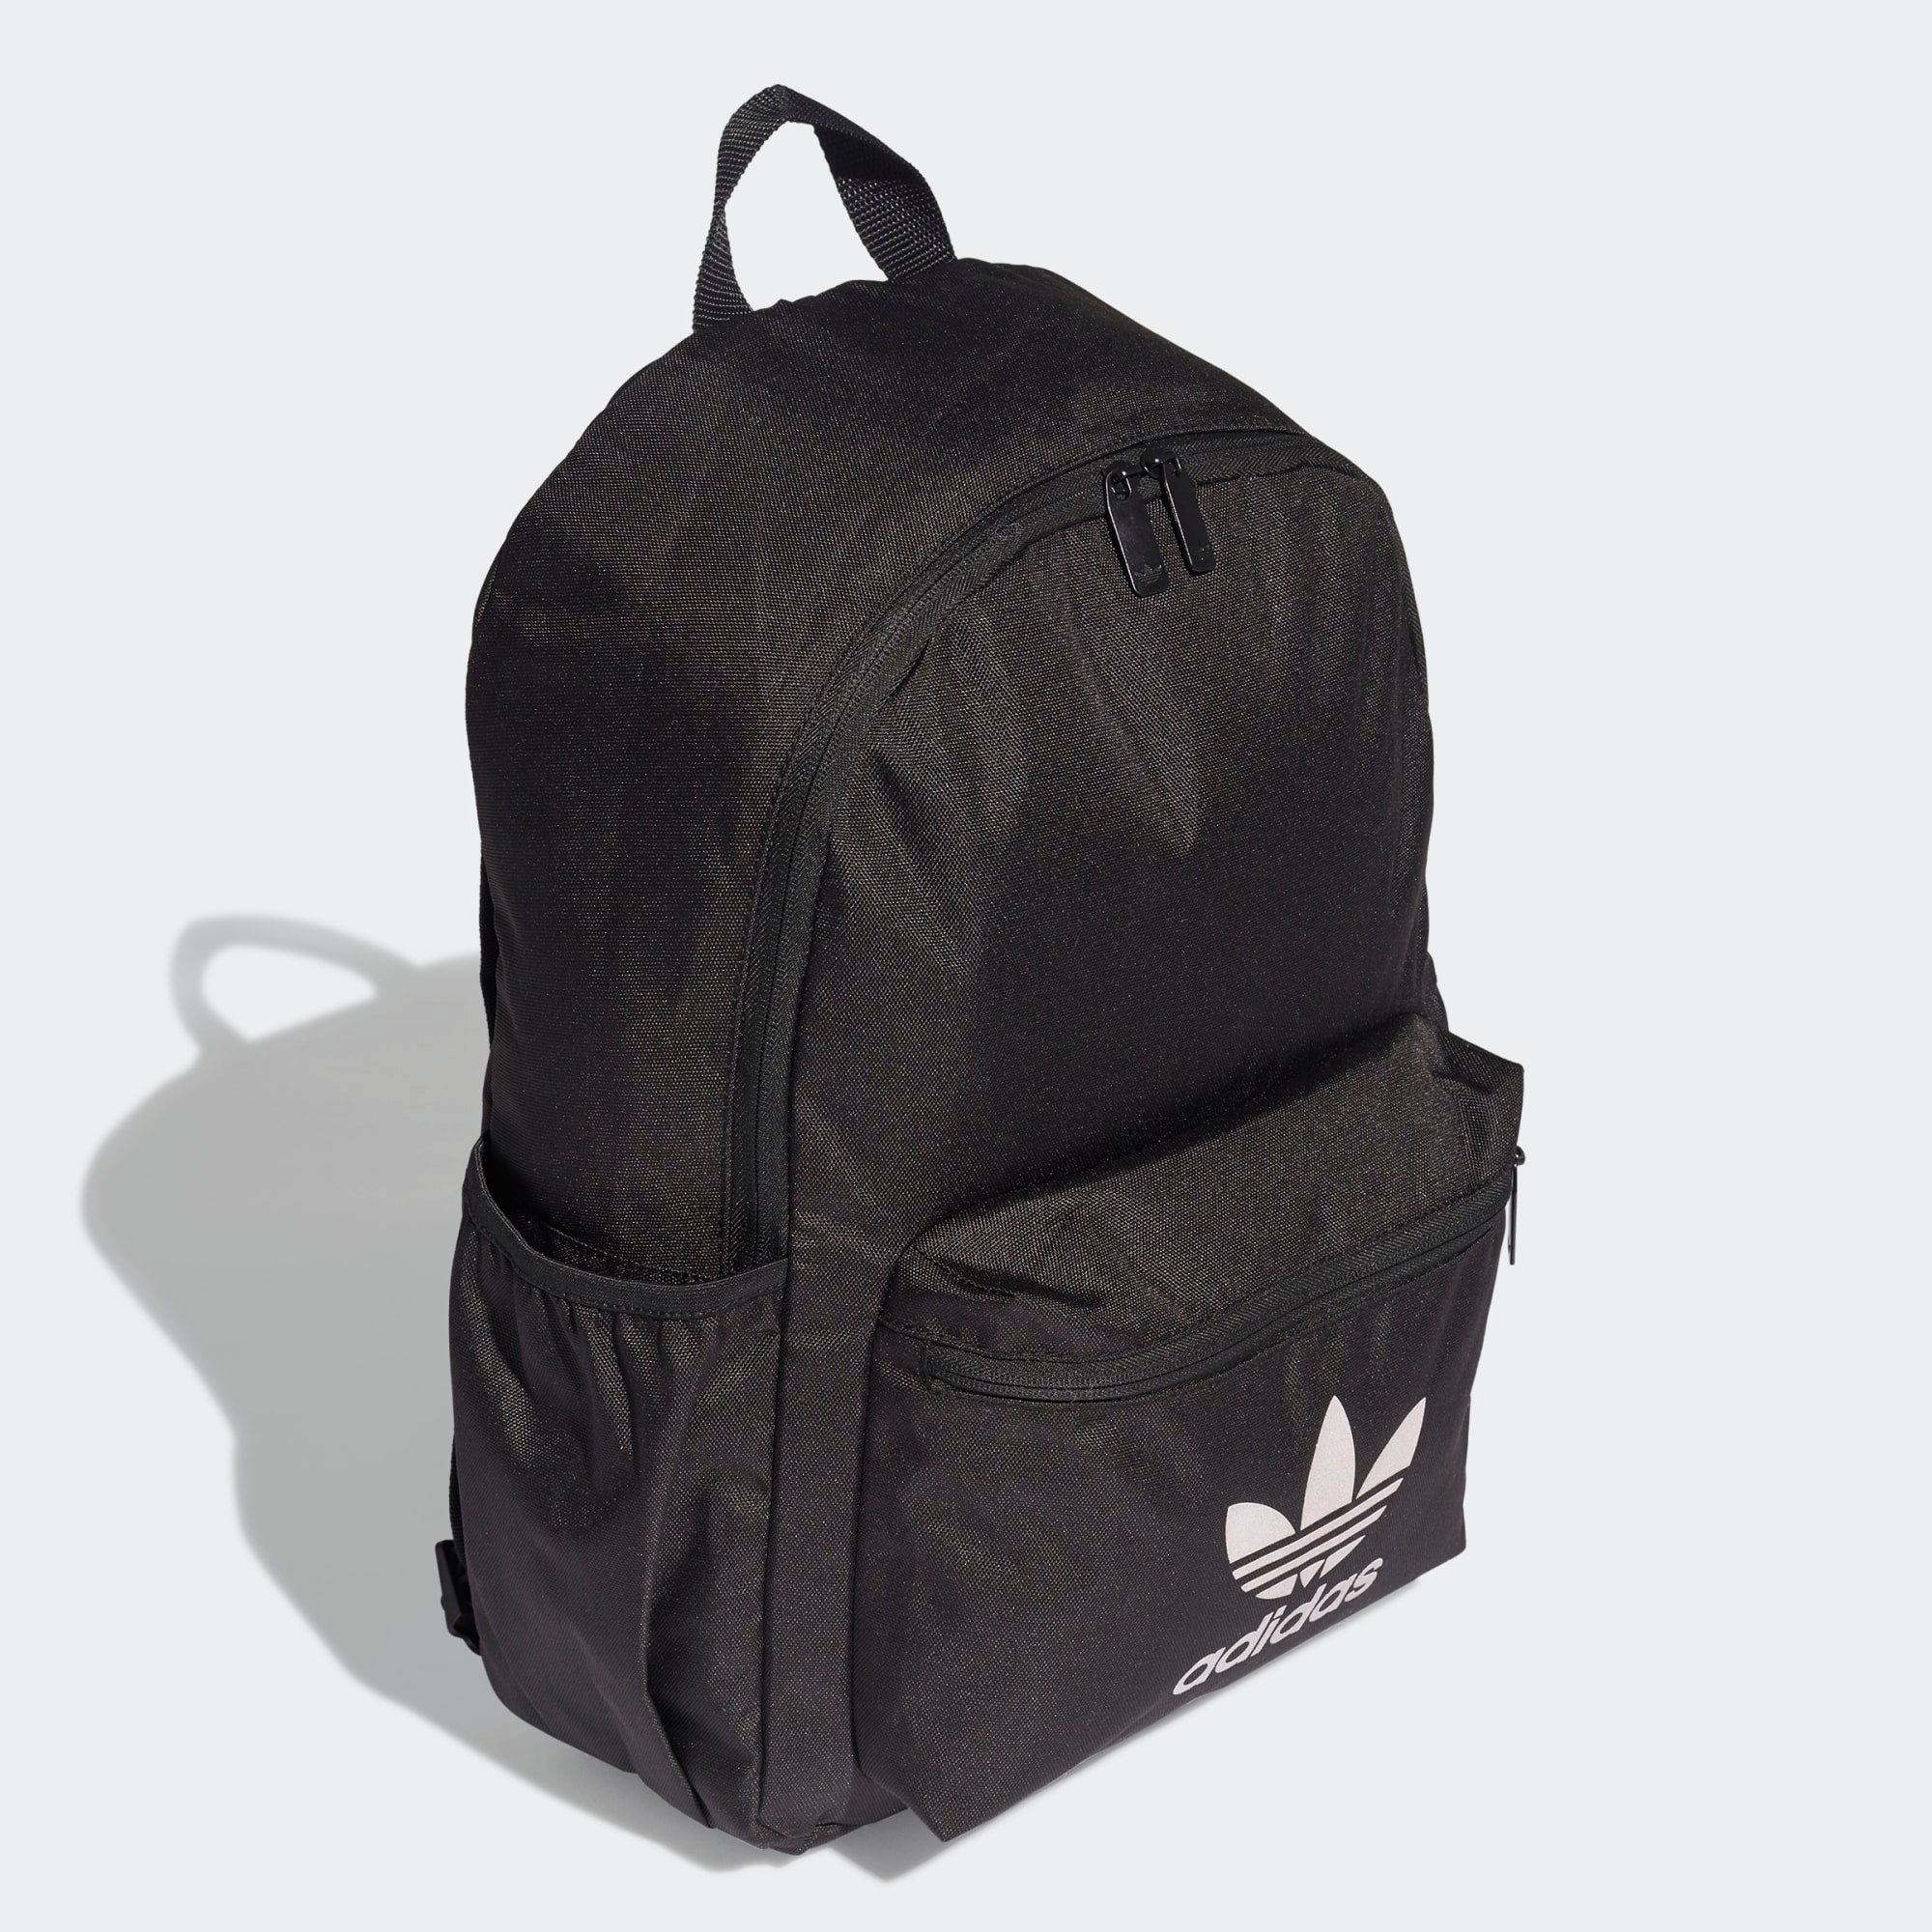 tradesports.co.uk Adidas Originals Classic Graphic Backpack - Black